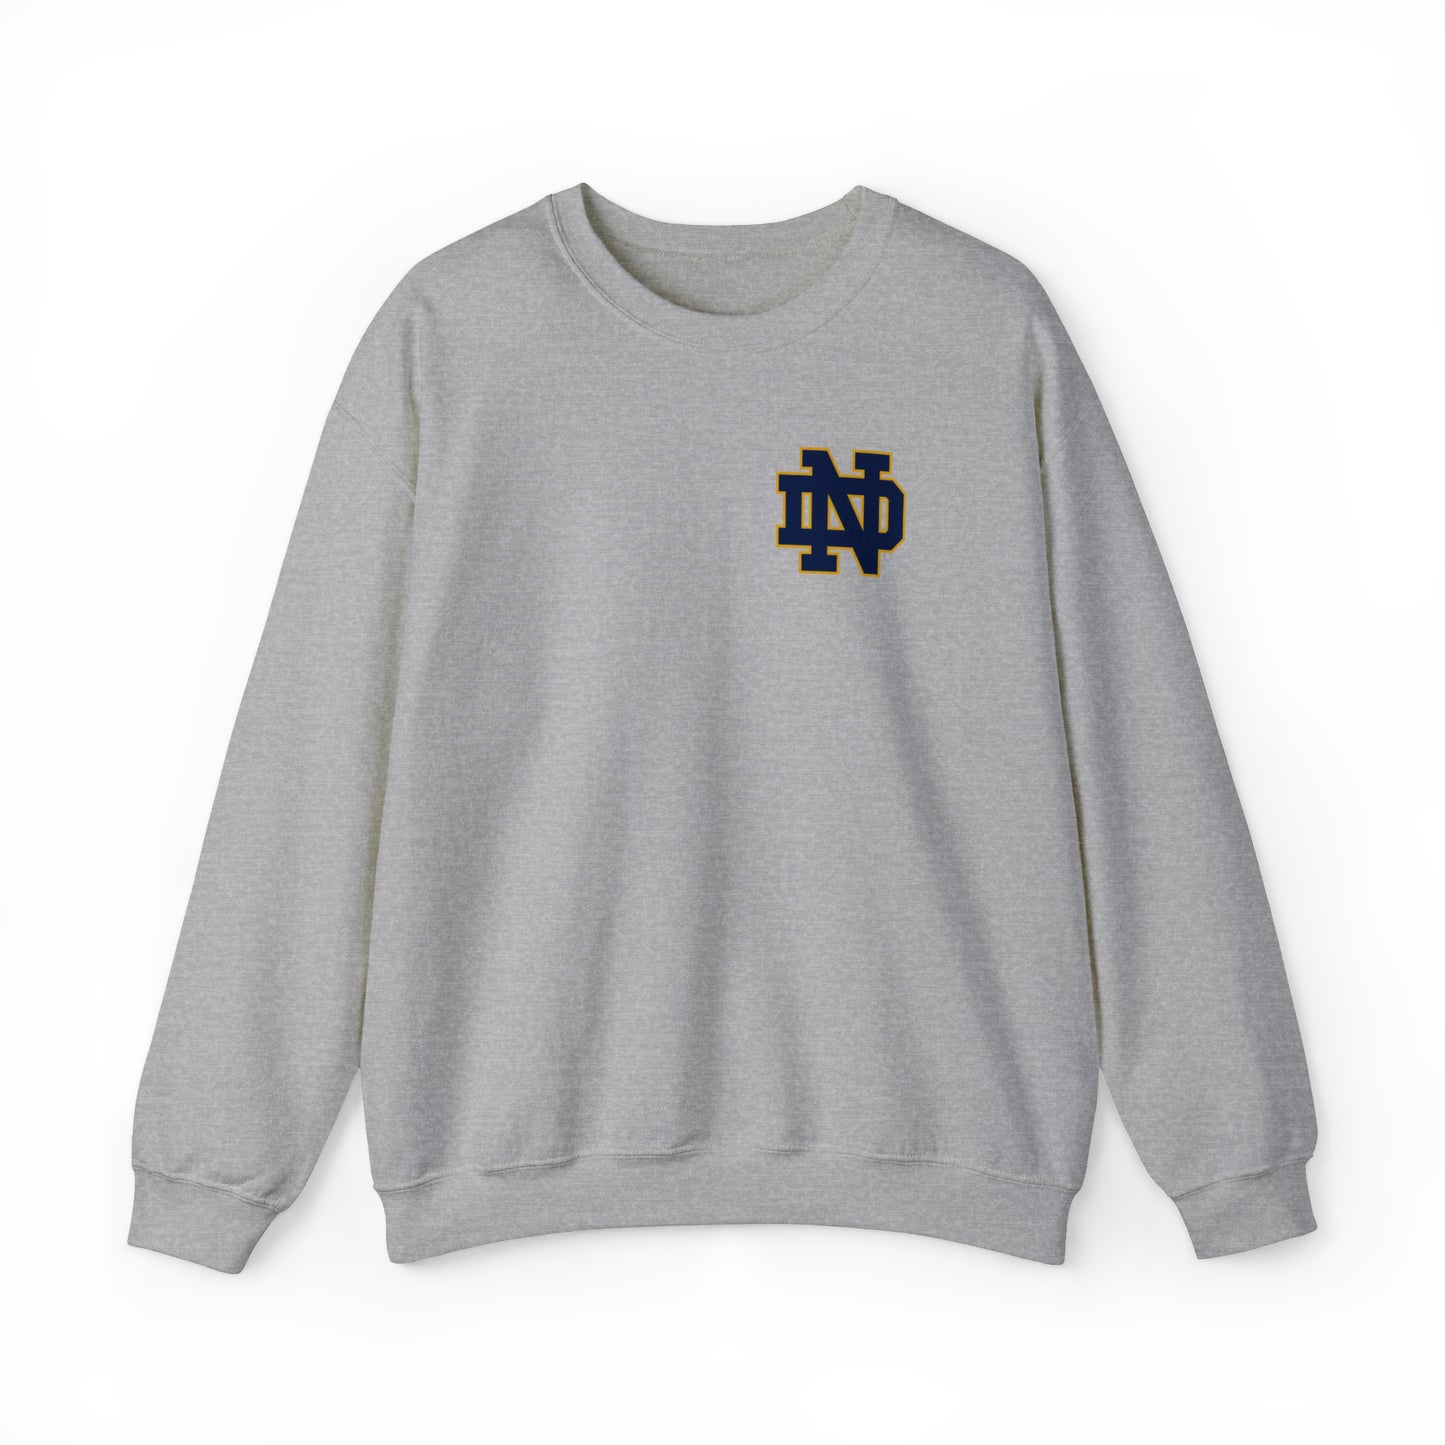 Notre Dame Game Day Sweatshirt